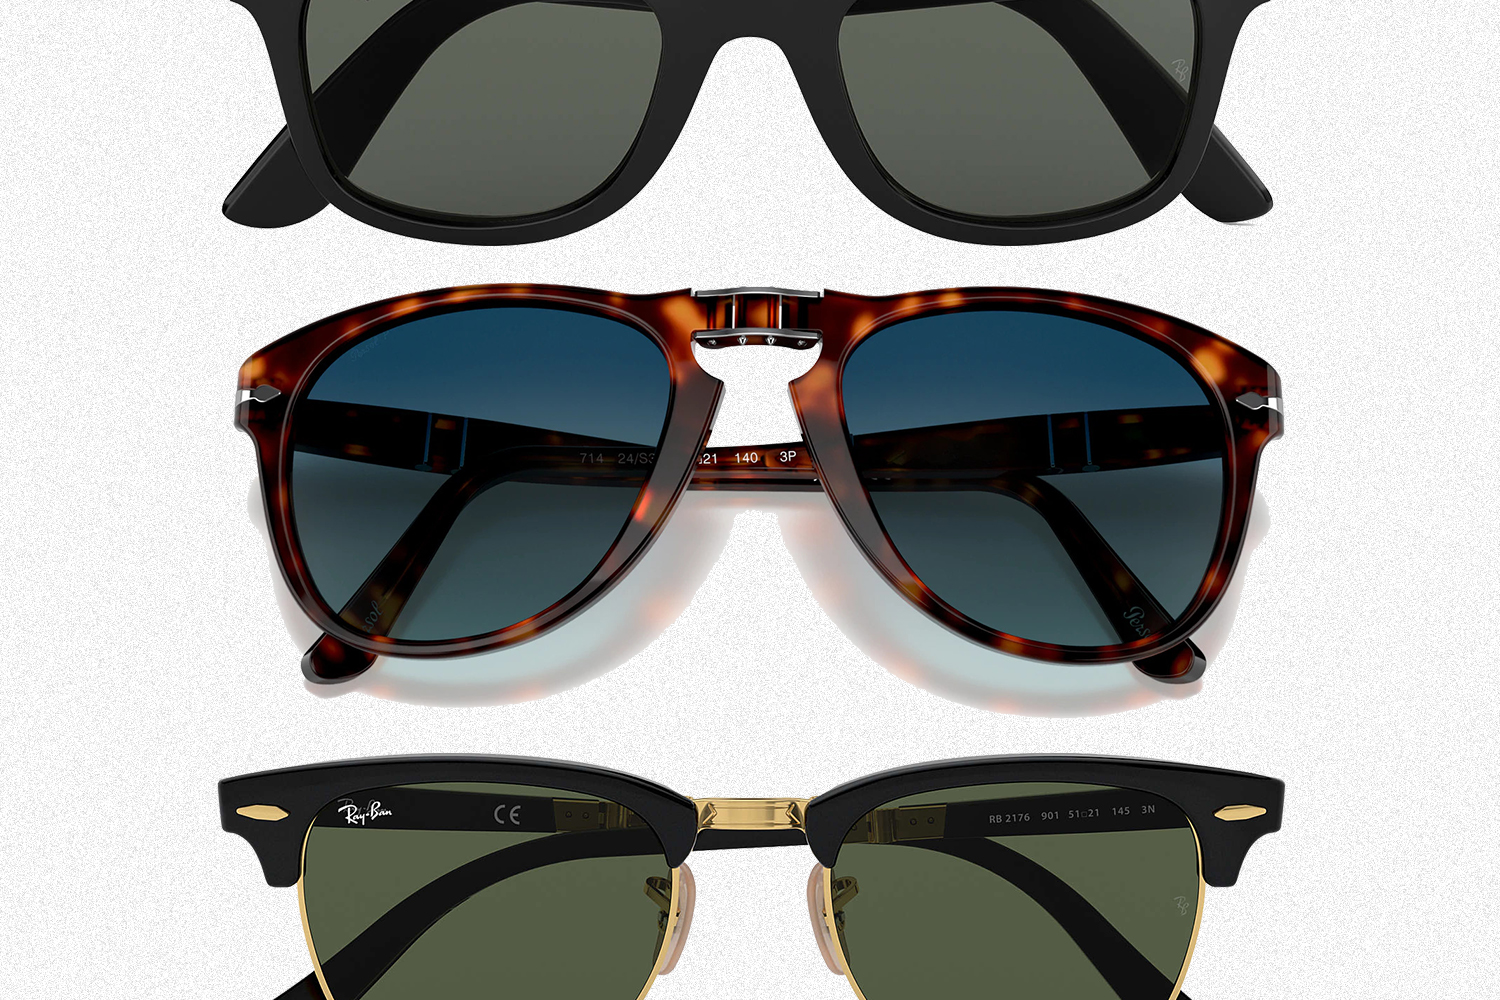 black friday deals on ray ban sunglasses